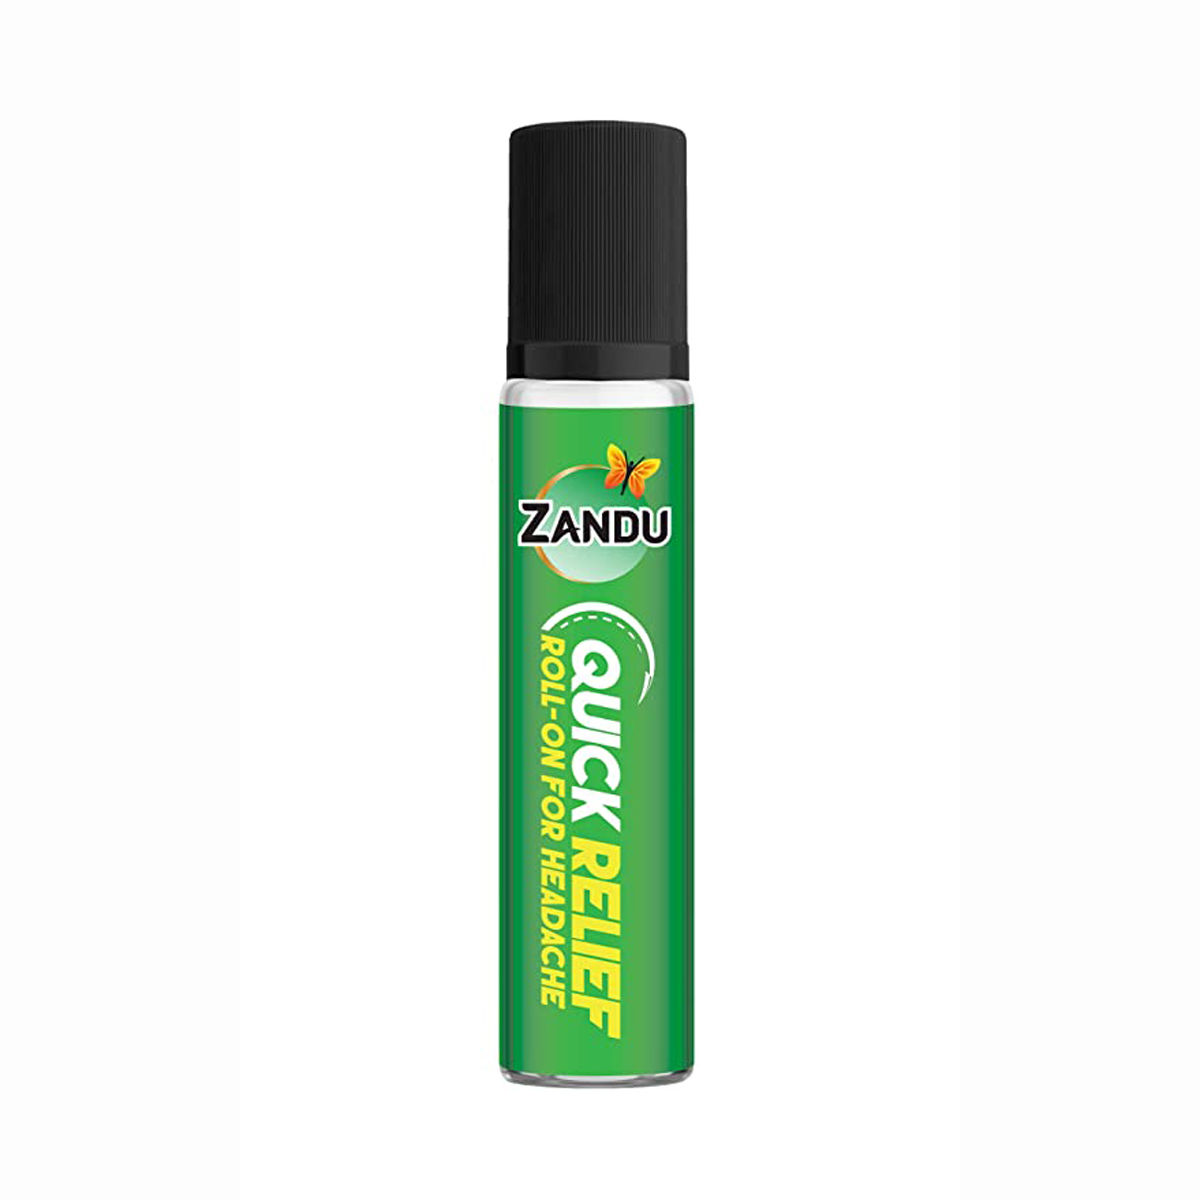 Zandu Headache Quick Relief Roll-On, 9 ml, Pack of 1 